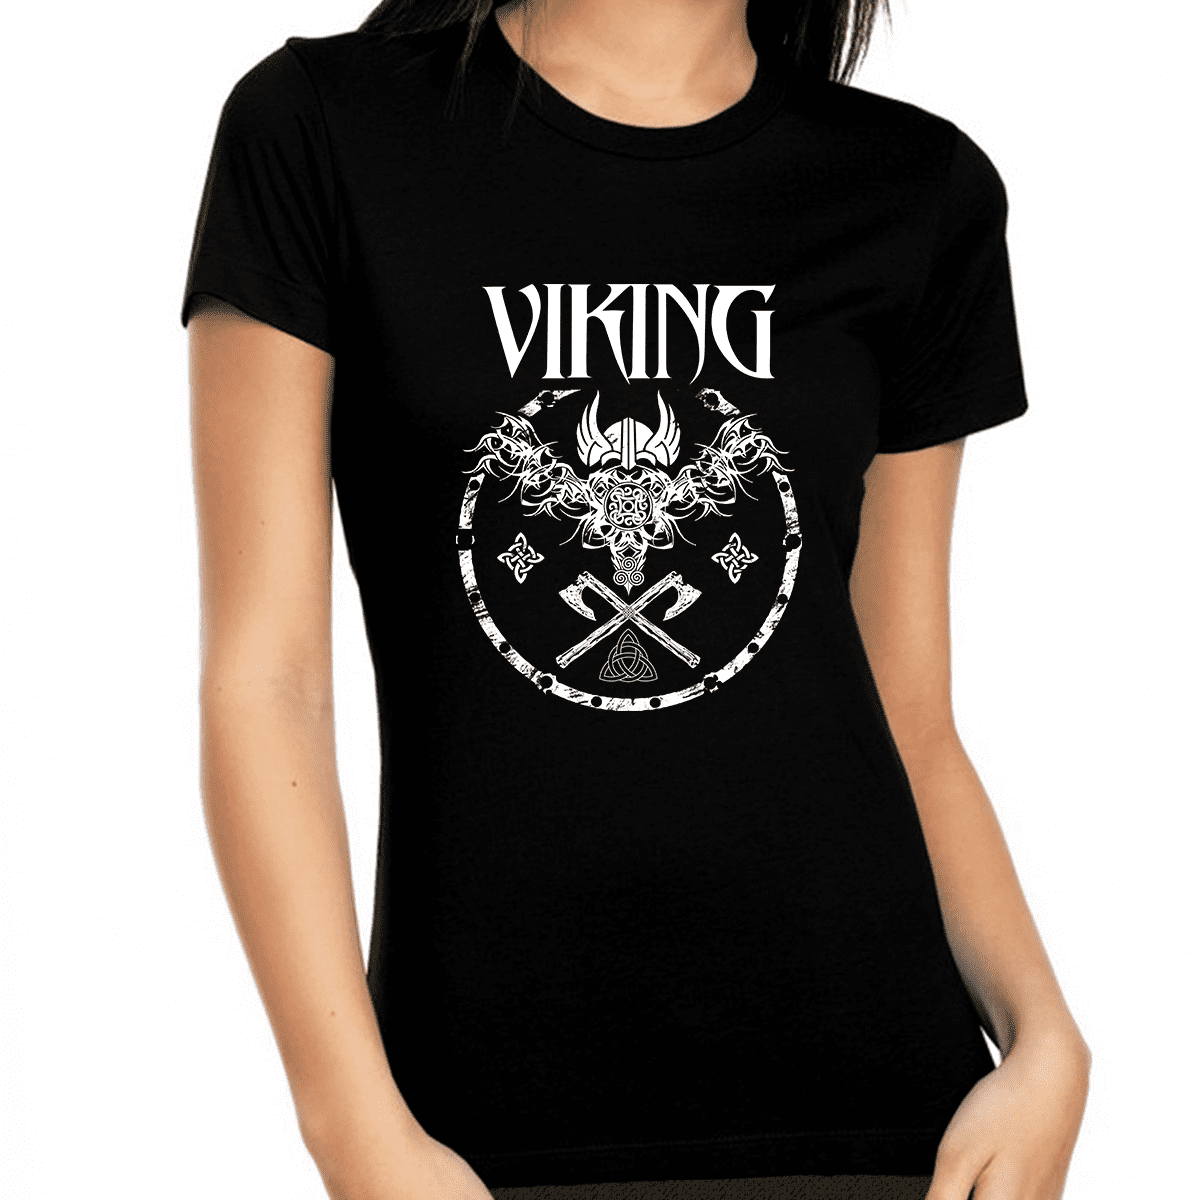 womens vikings shirt